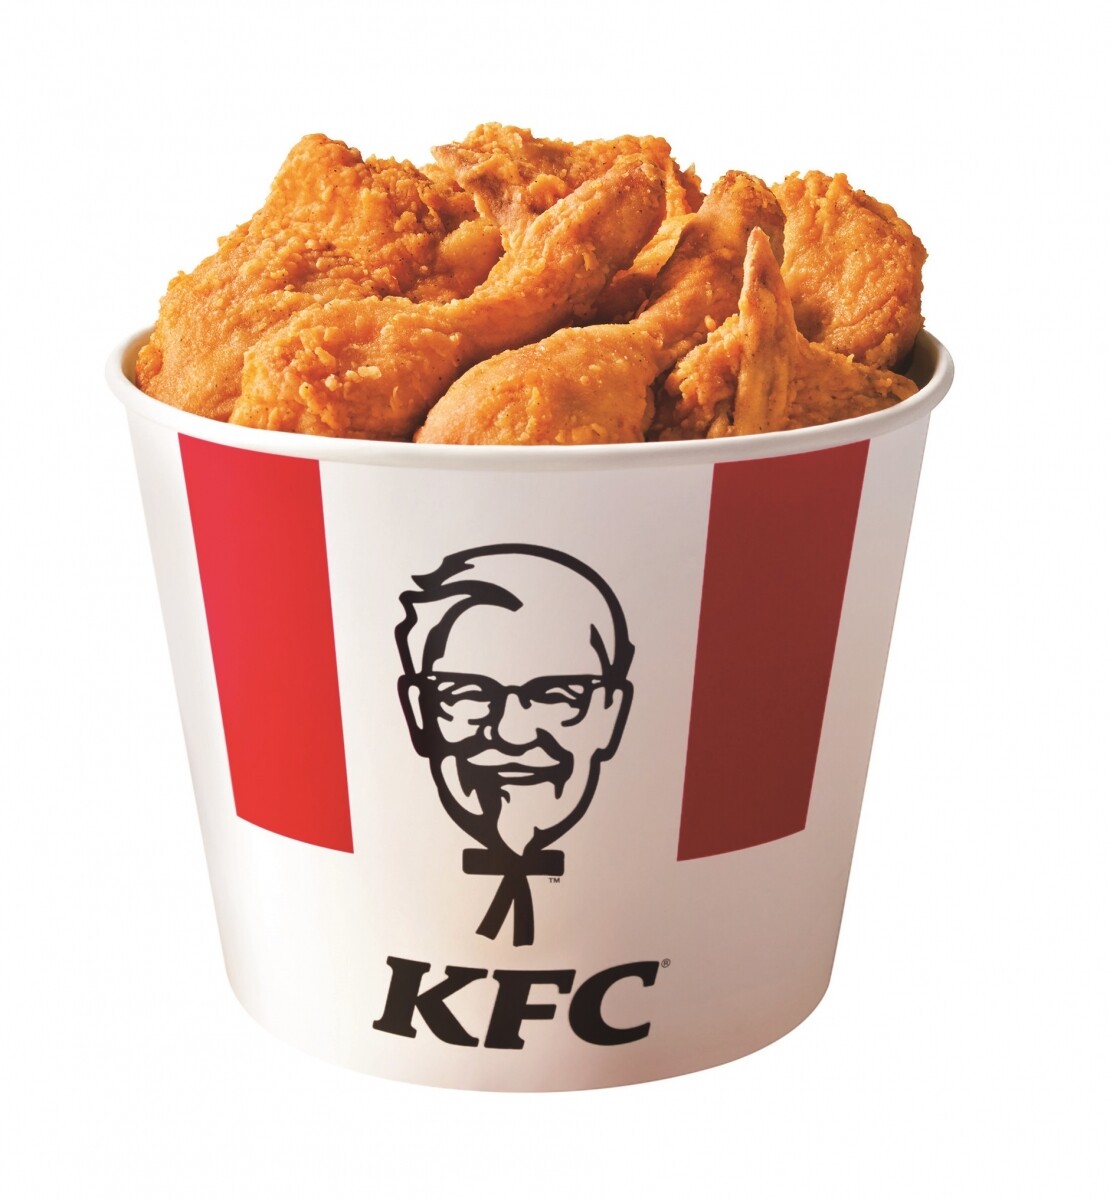 Kentucky fried chicken каталог